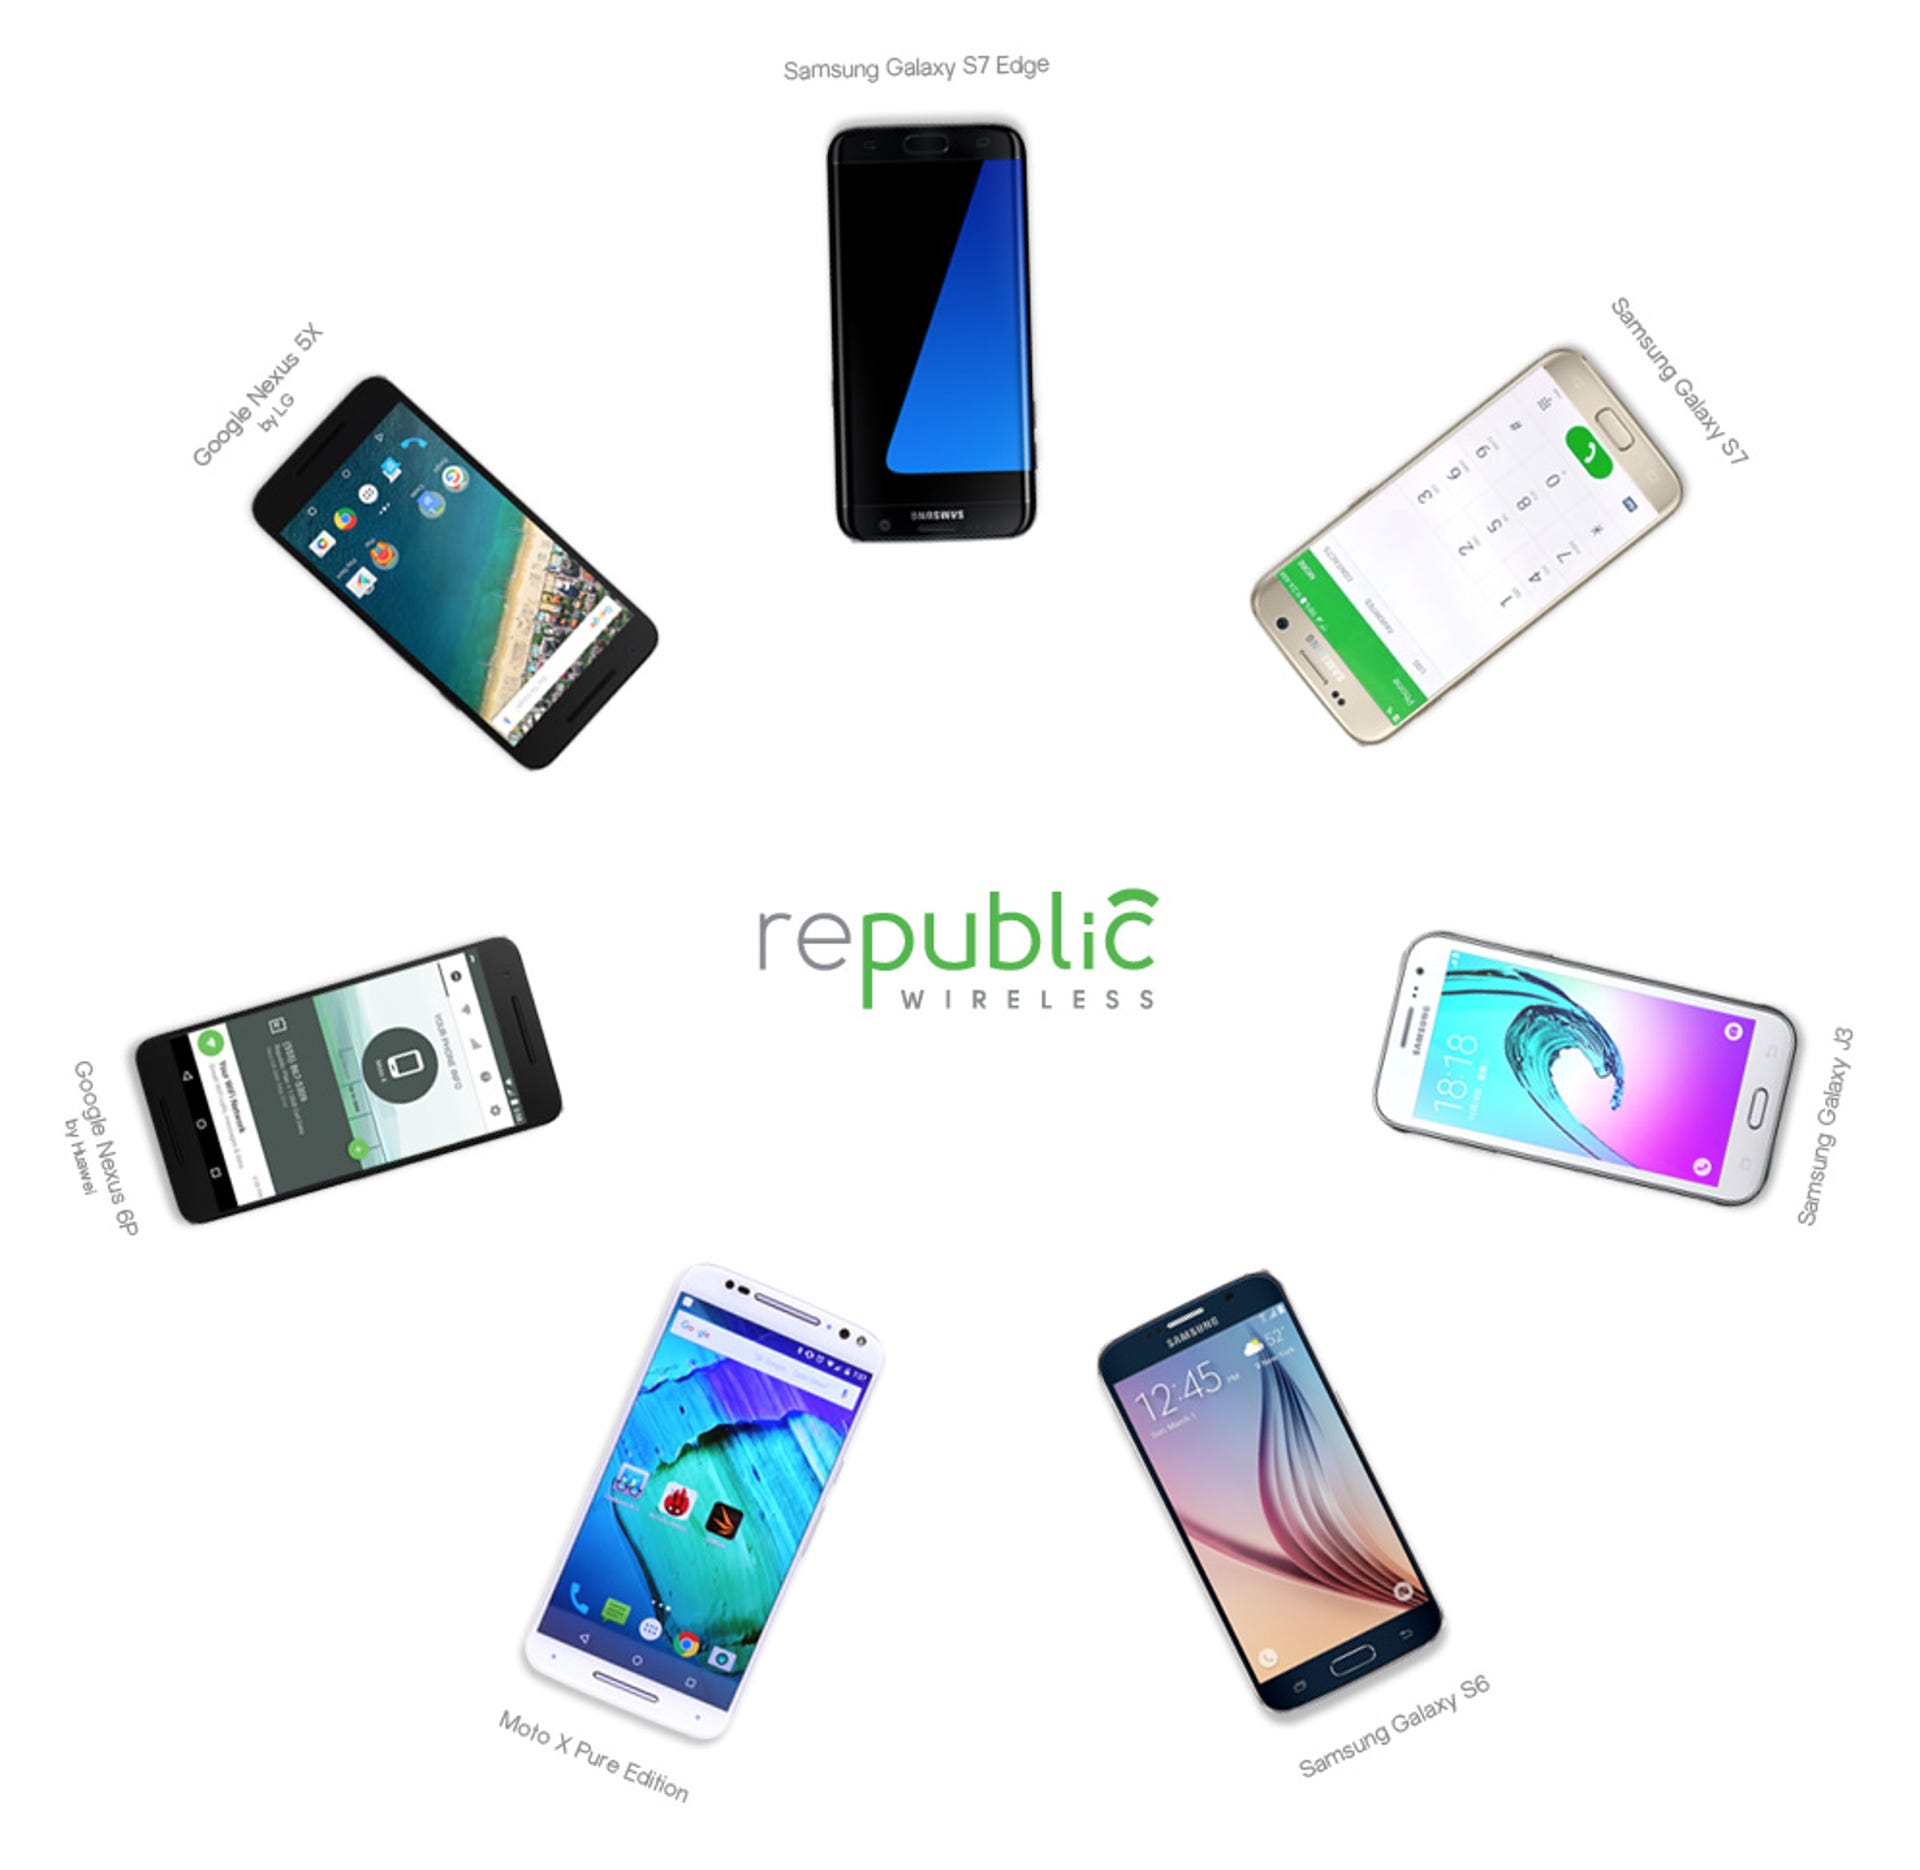 republic-wireless-new-phones.jpg